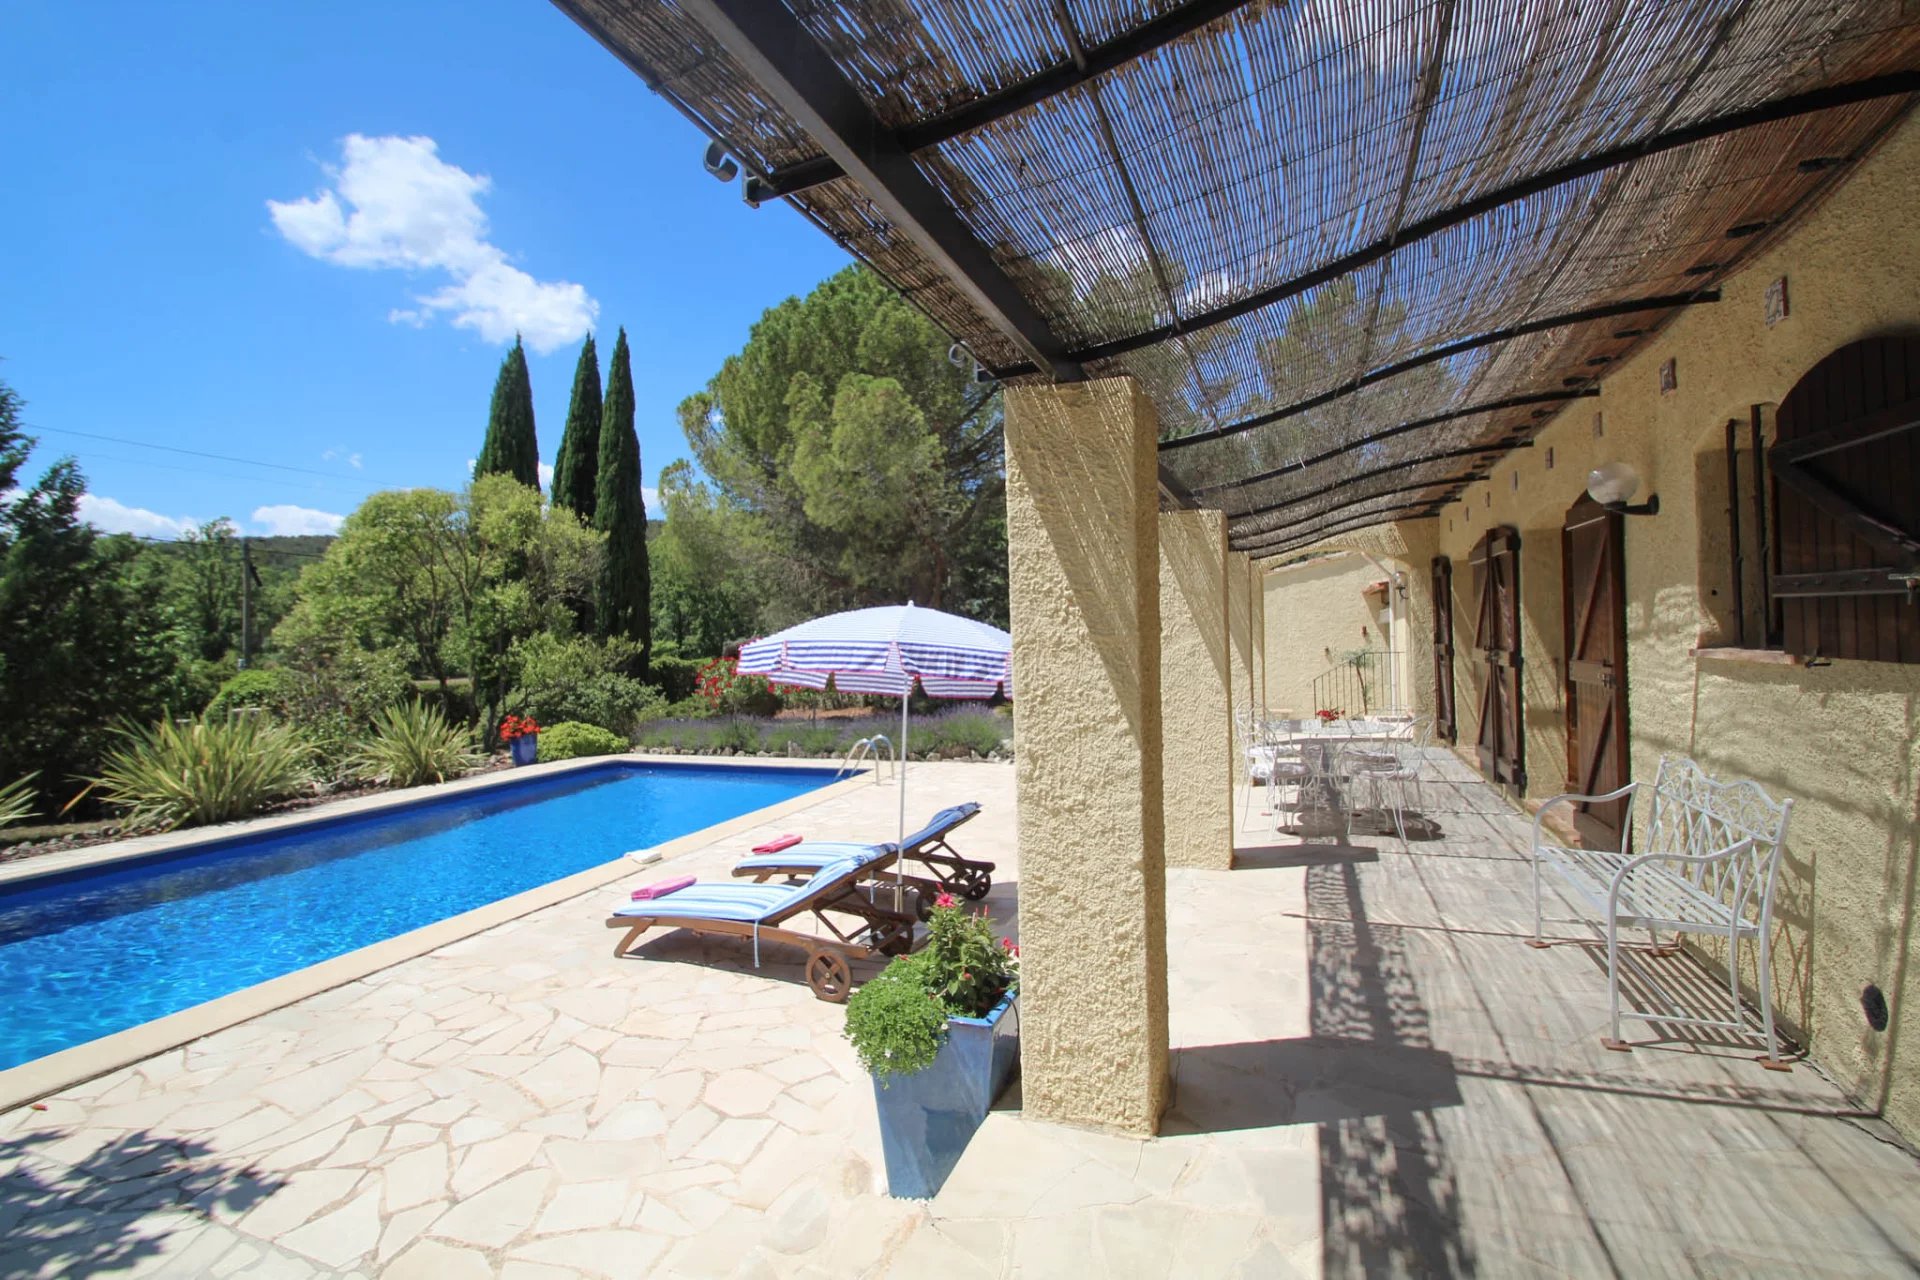 Fayence : Single storey villa with pool and garage